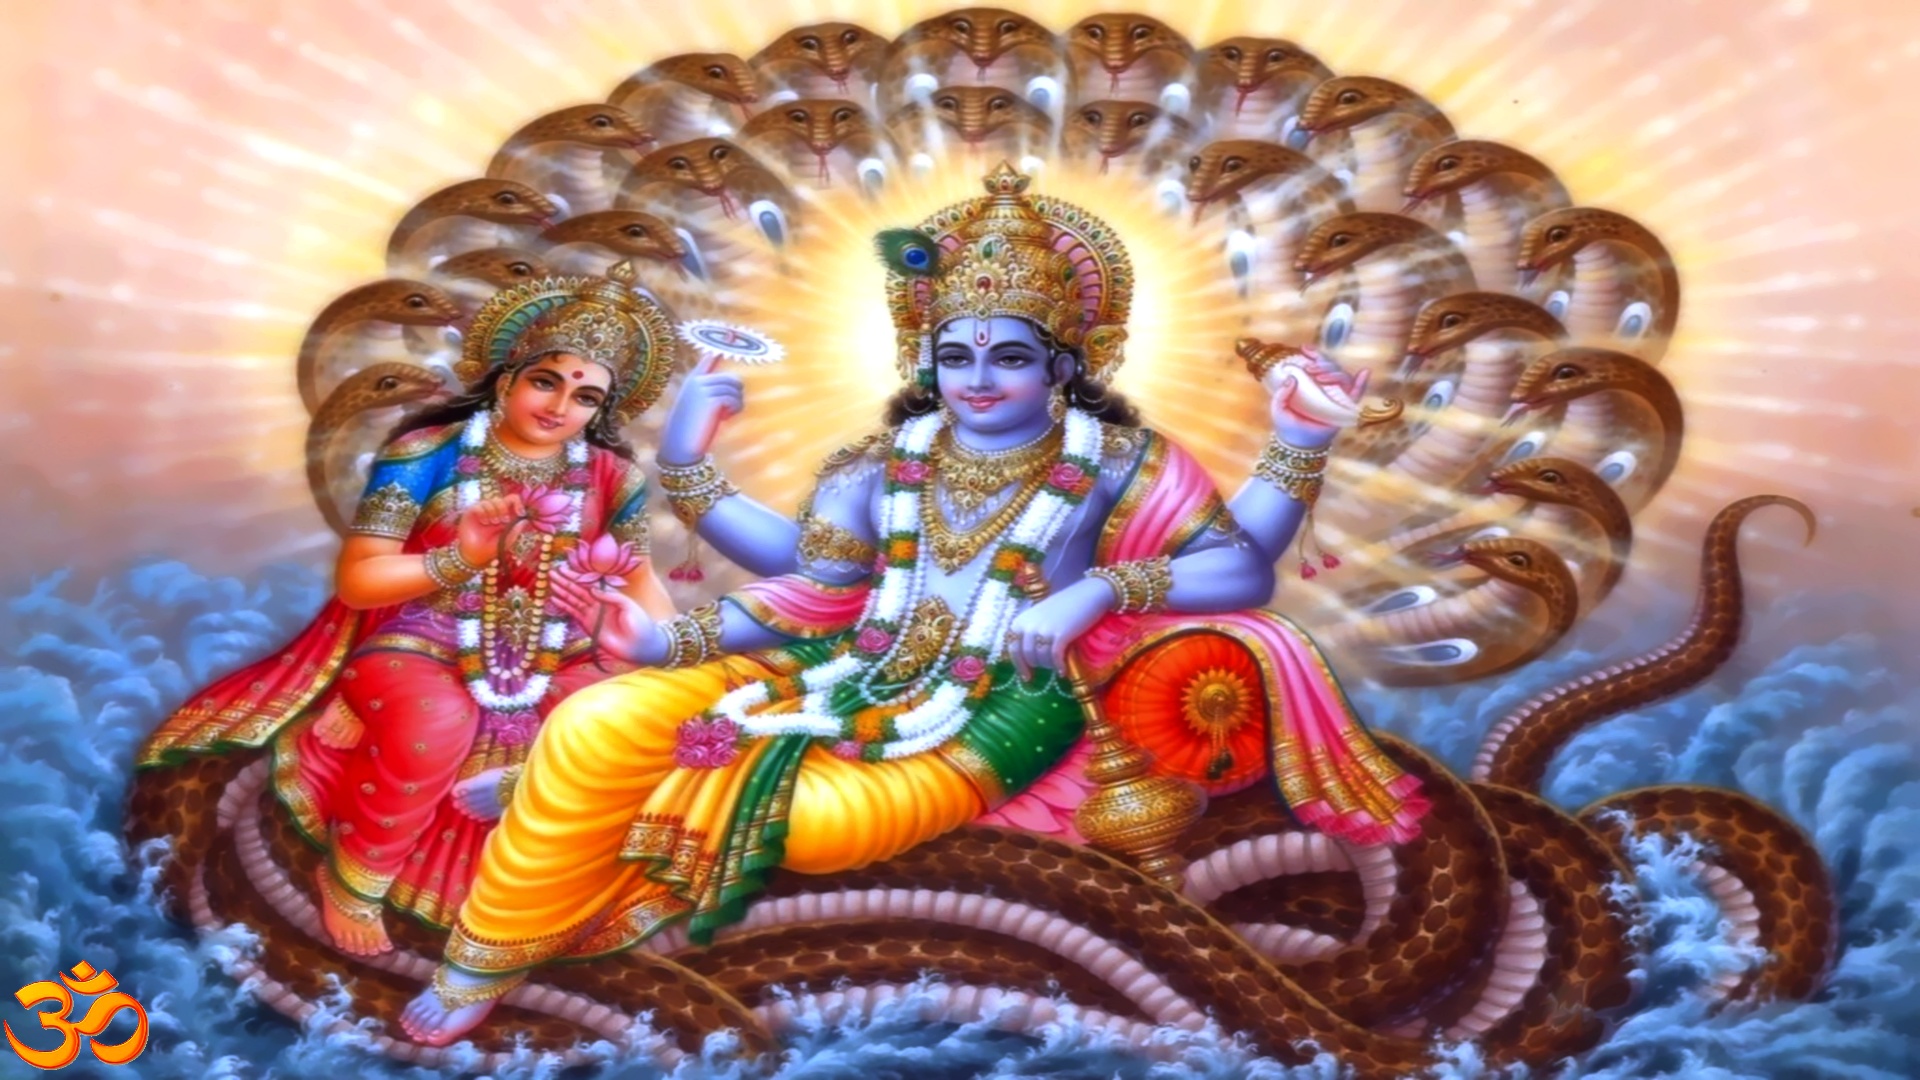 Cute smiling face of Lord Vishnu and Goddess Lakshmi sitting over seshnaag